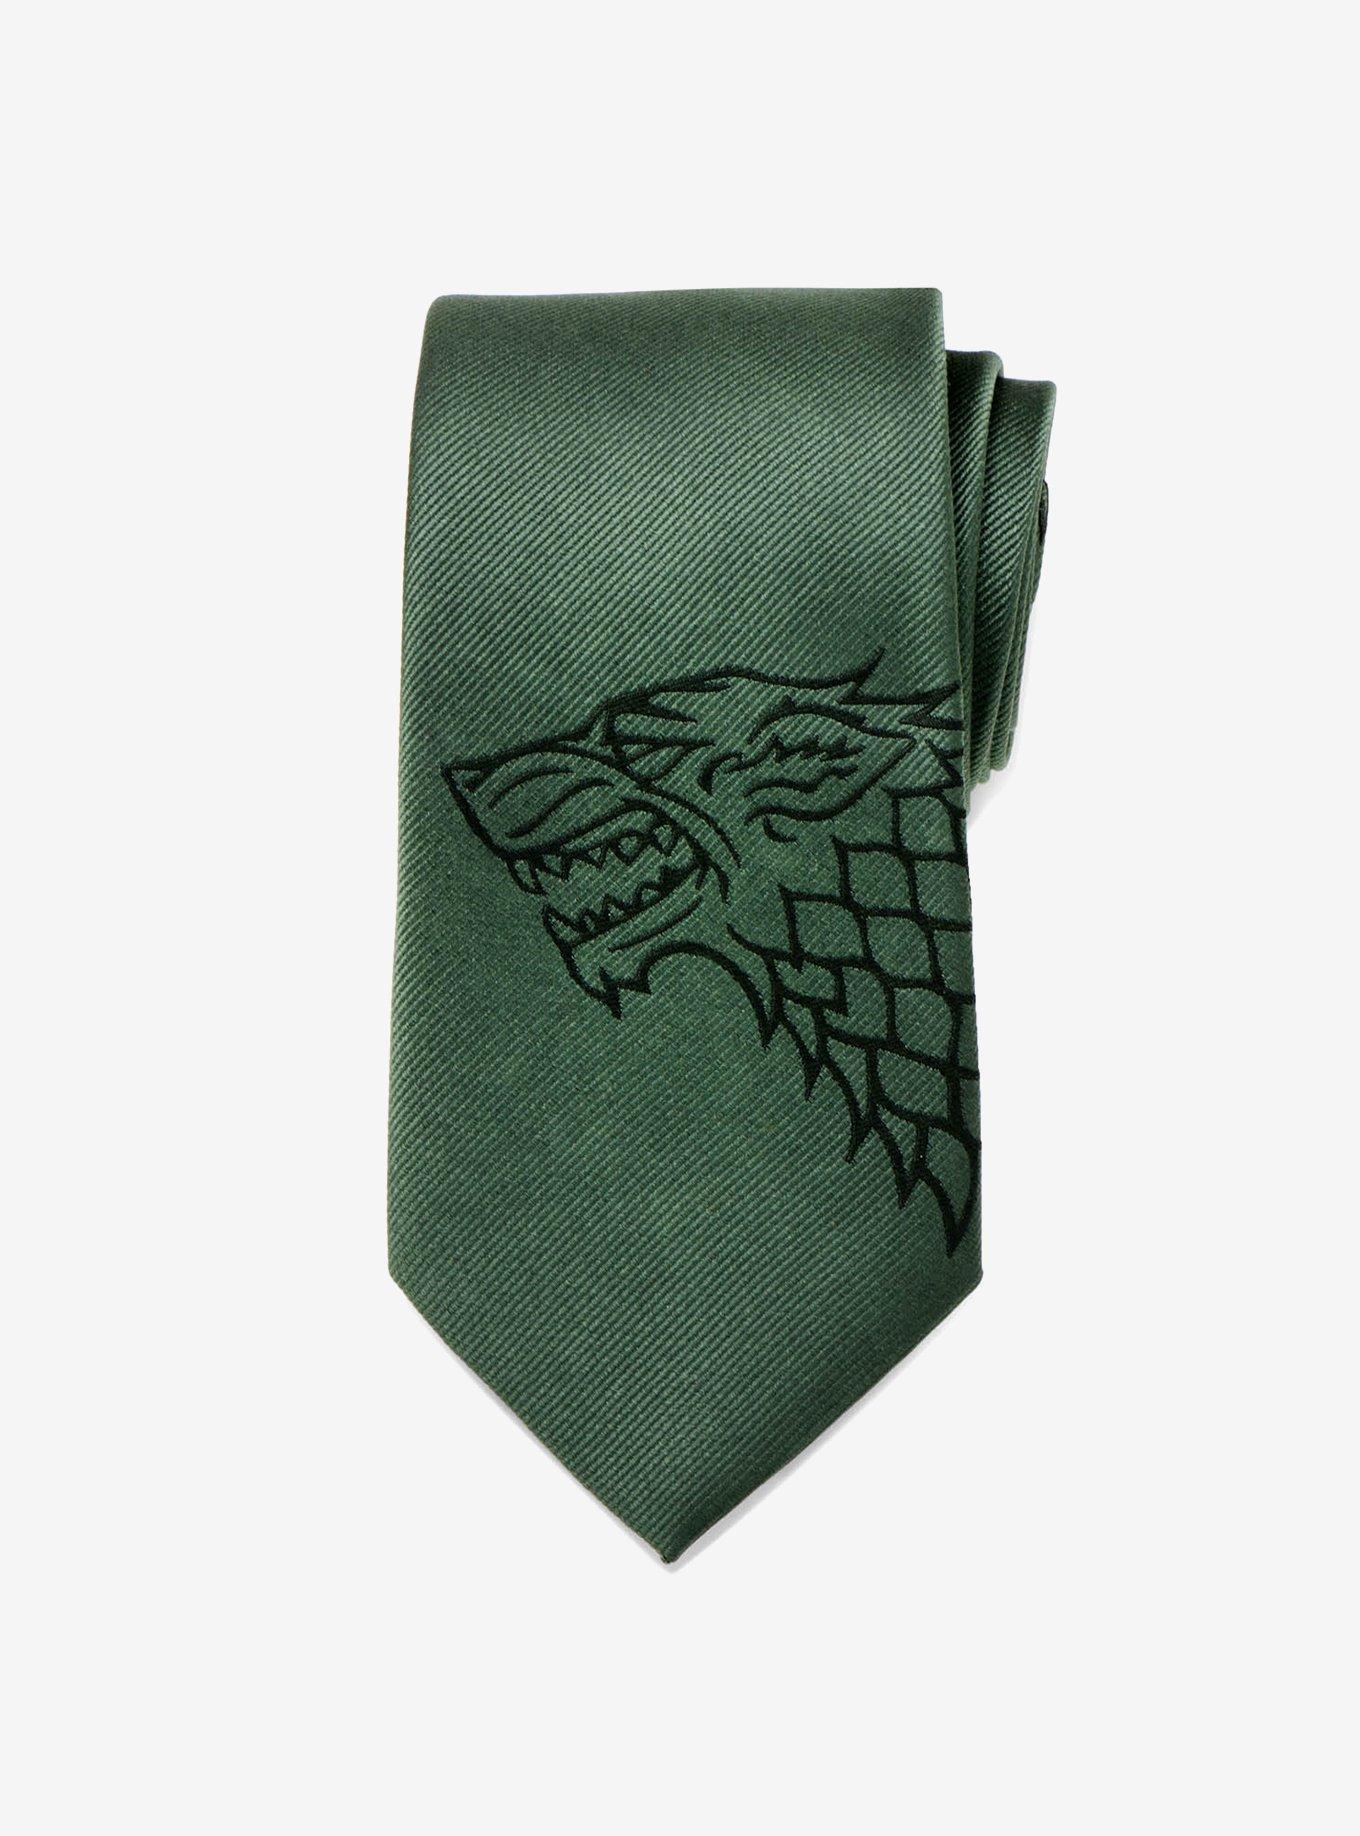 Game Of Thrones Stark Direwolf Green Tie